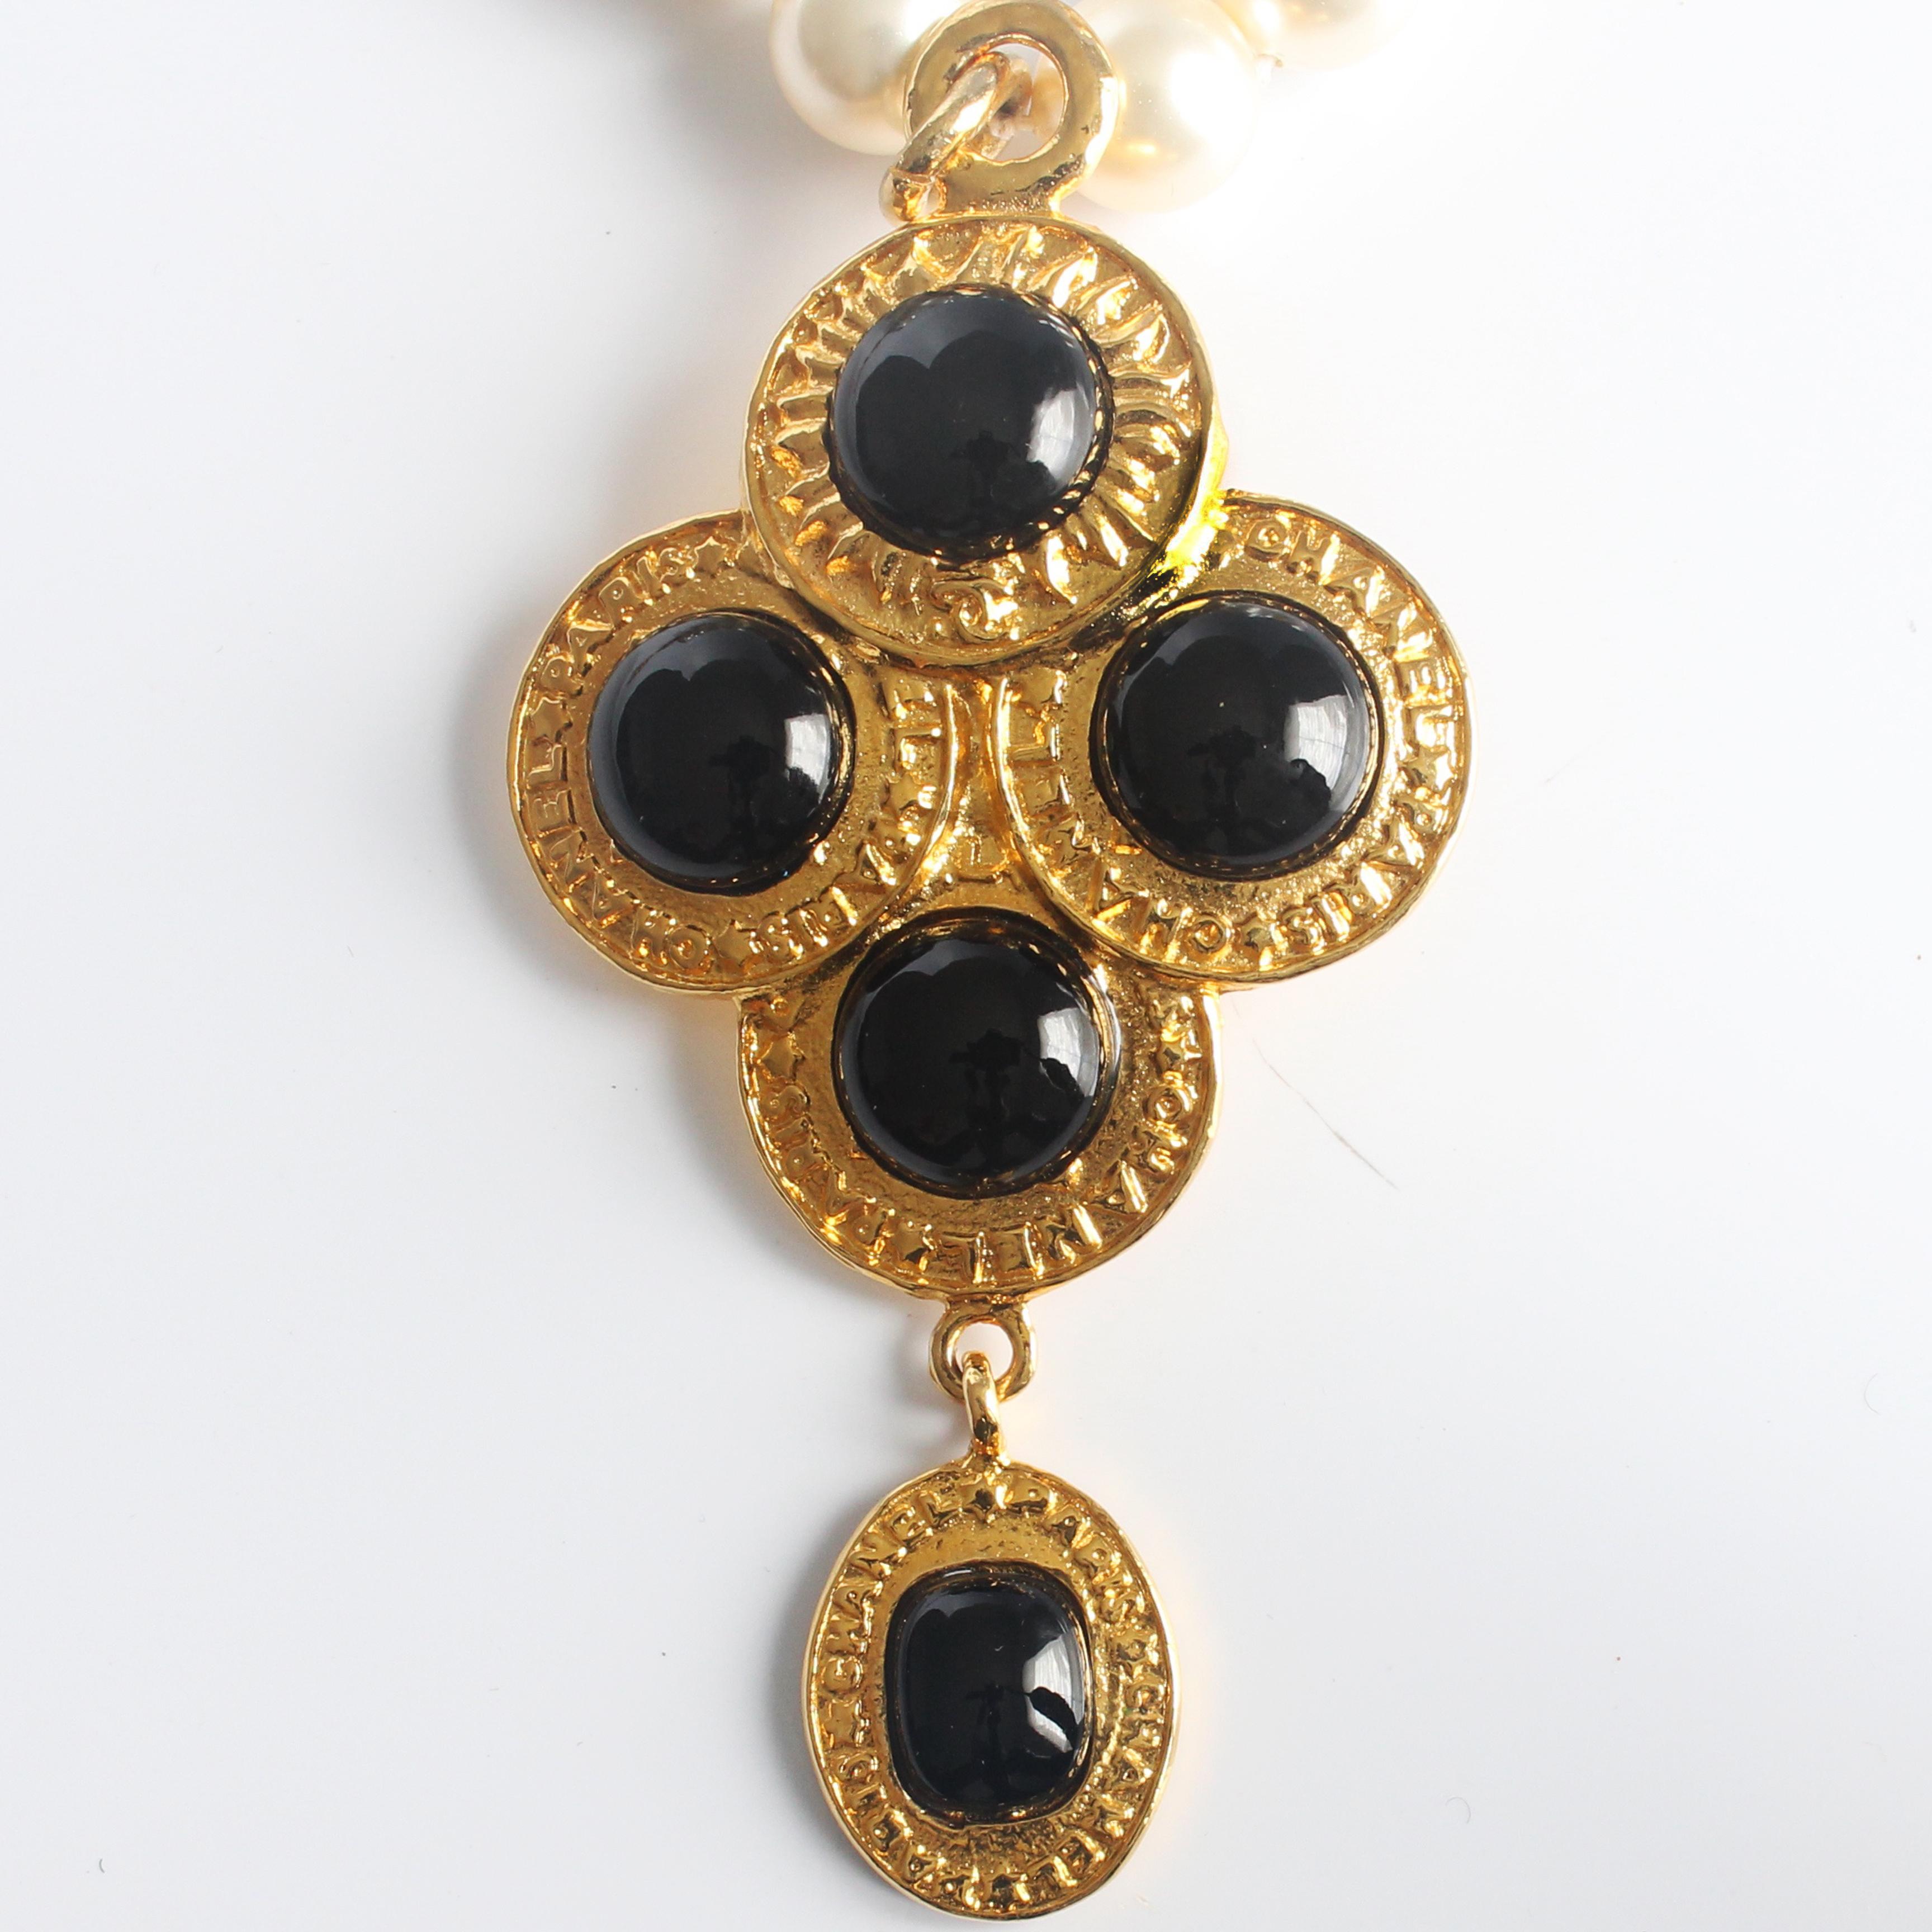 Chanel Necklace Large Medallion Pendant Poured Glass Pearls Vintage 90s + COA For Sale 1